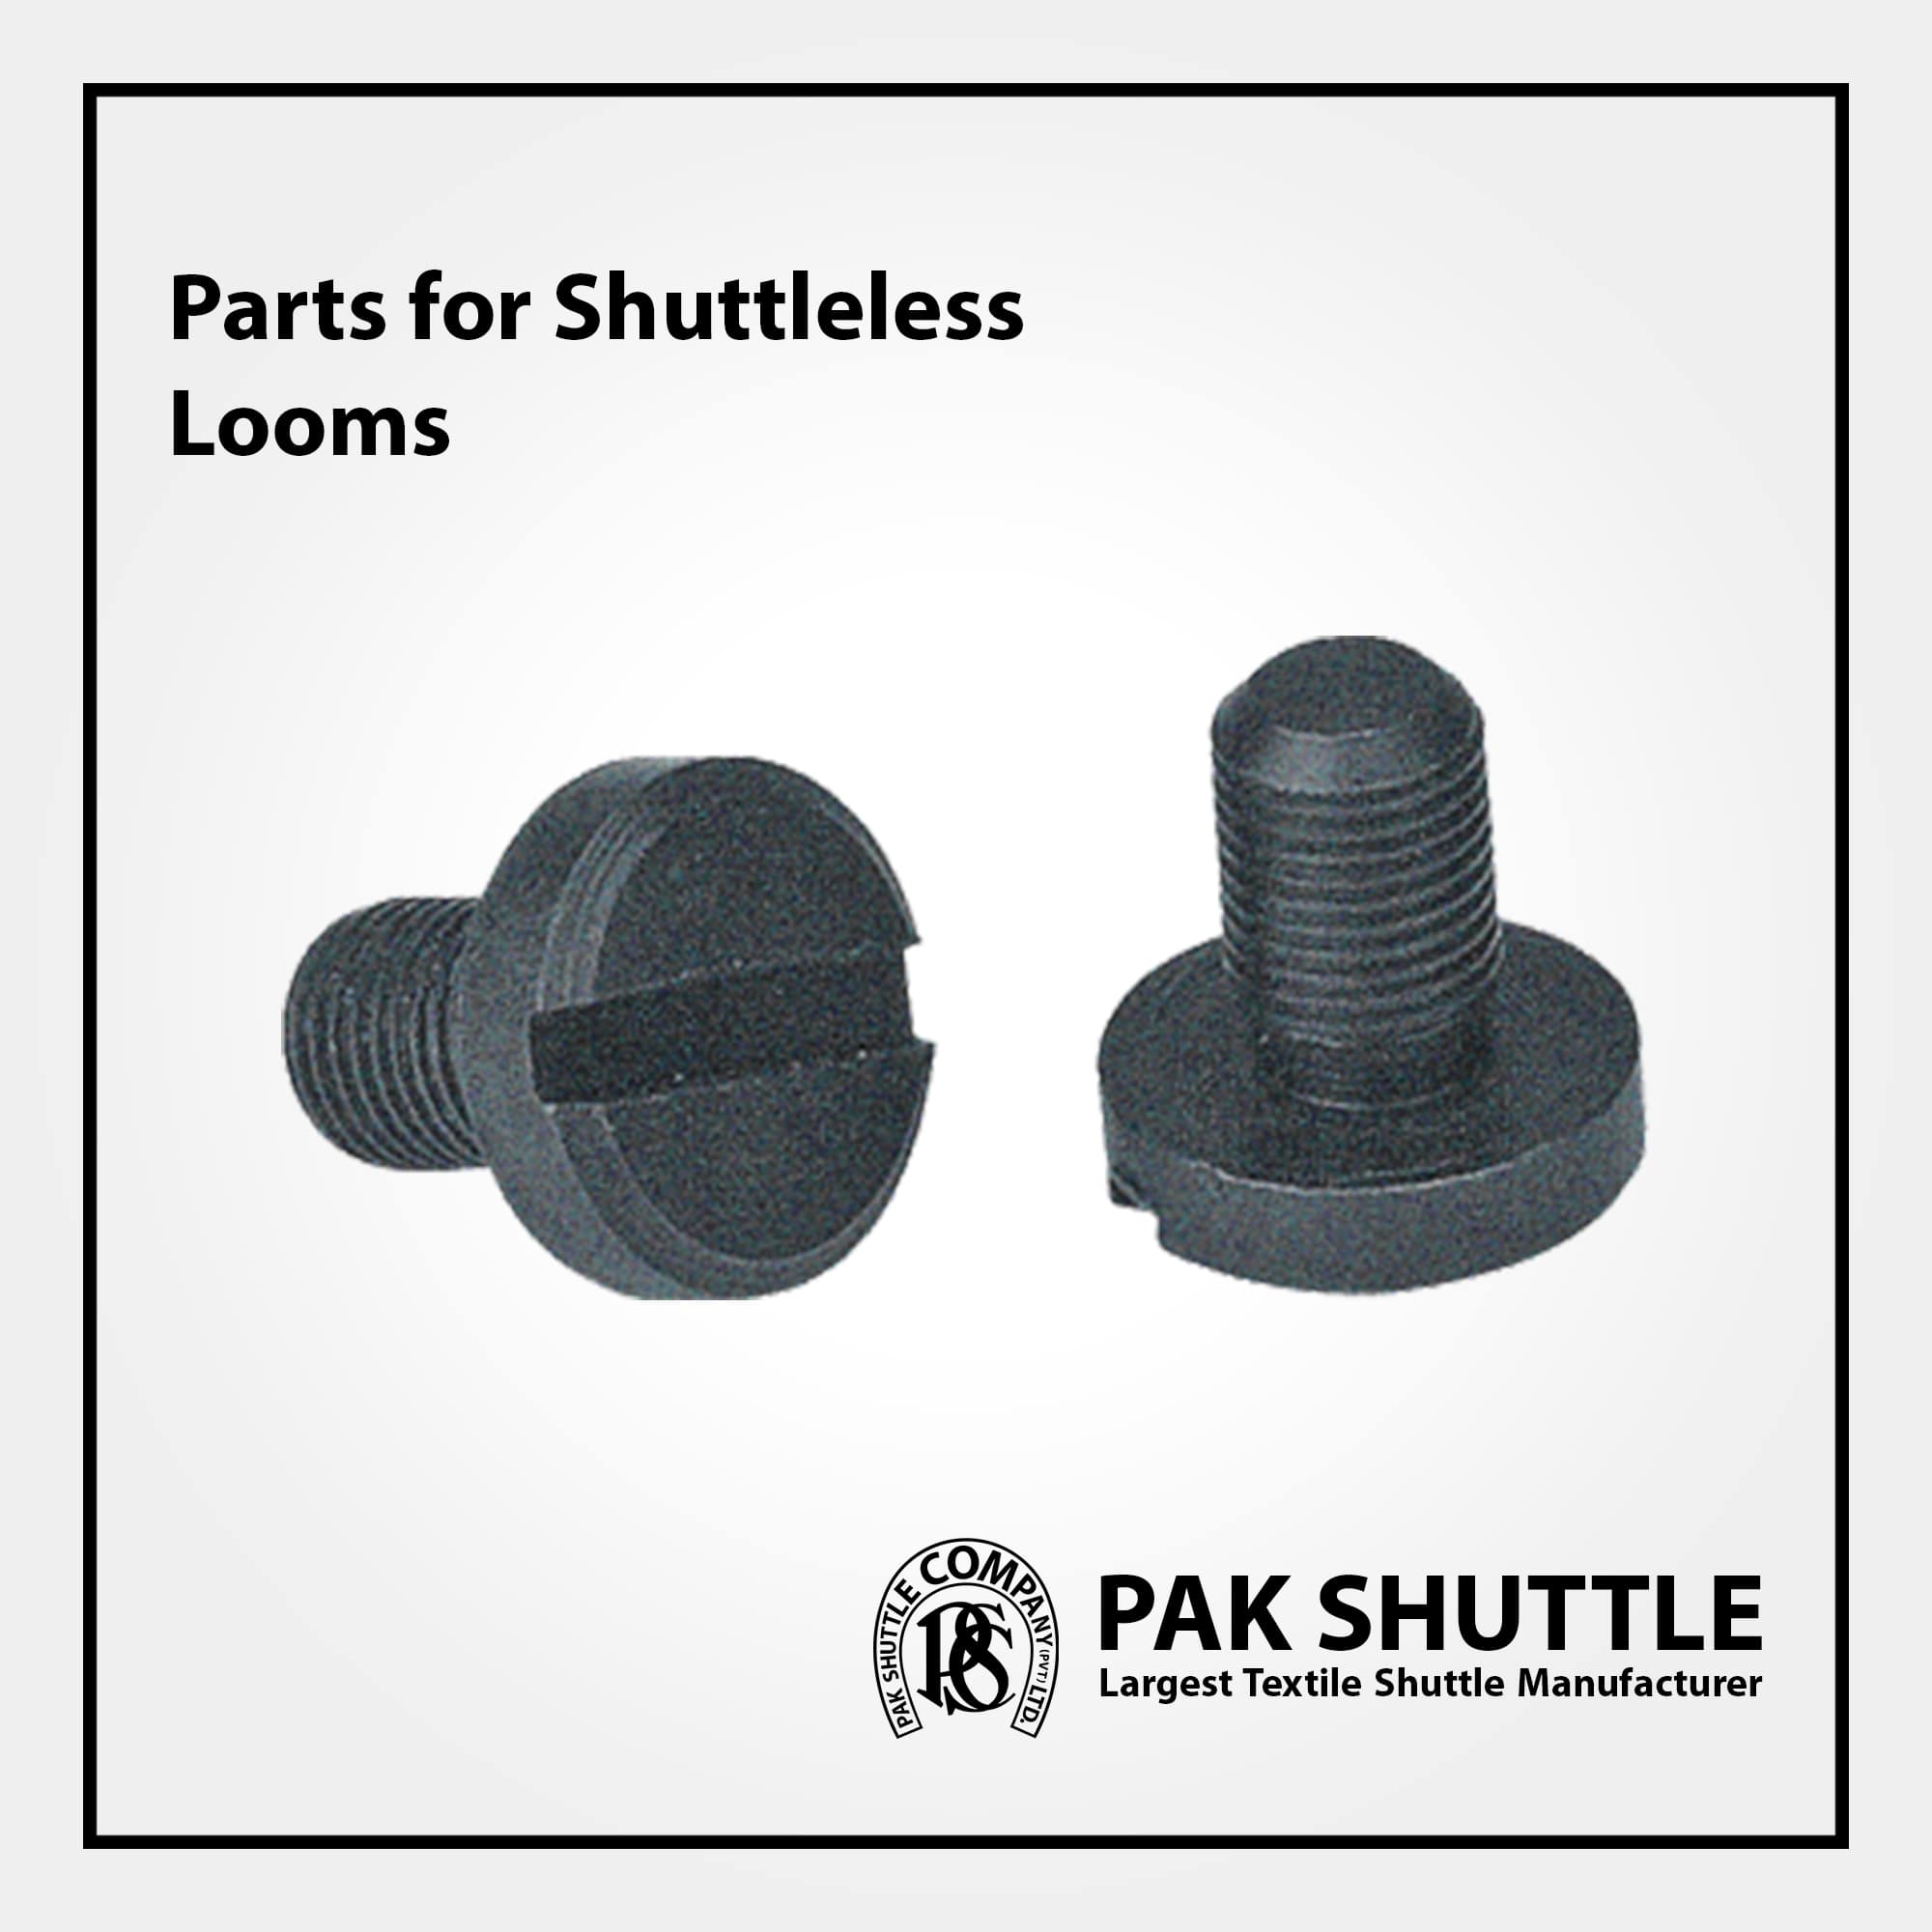 Shuttleless Loom Parts by Pak Shuttle Company Pvt Ltd.